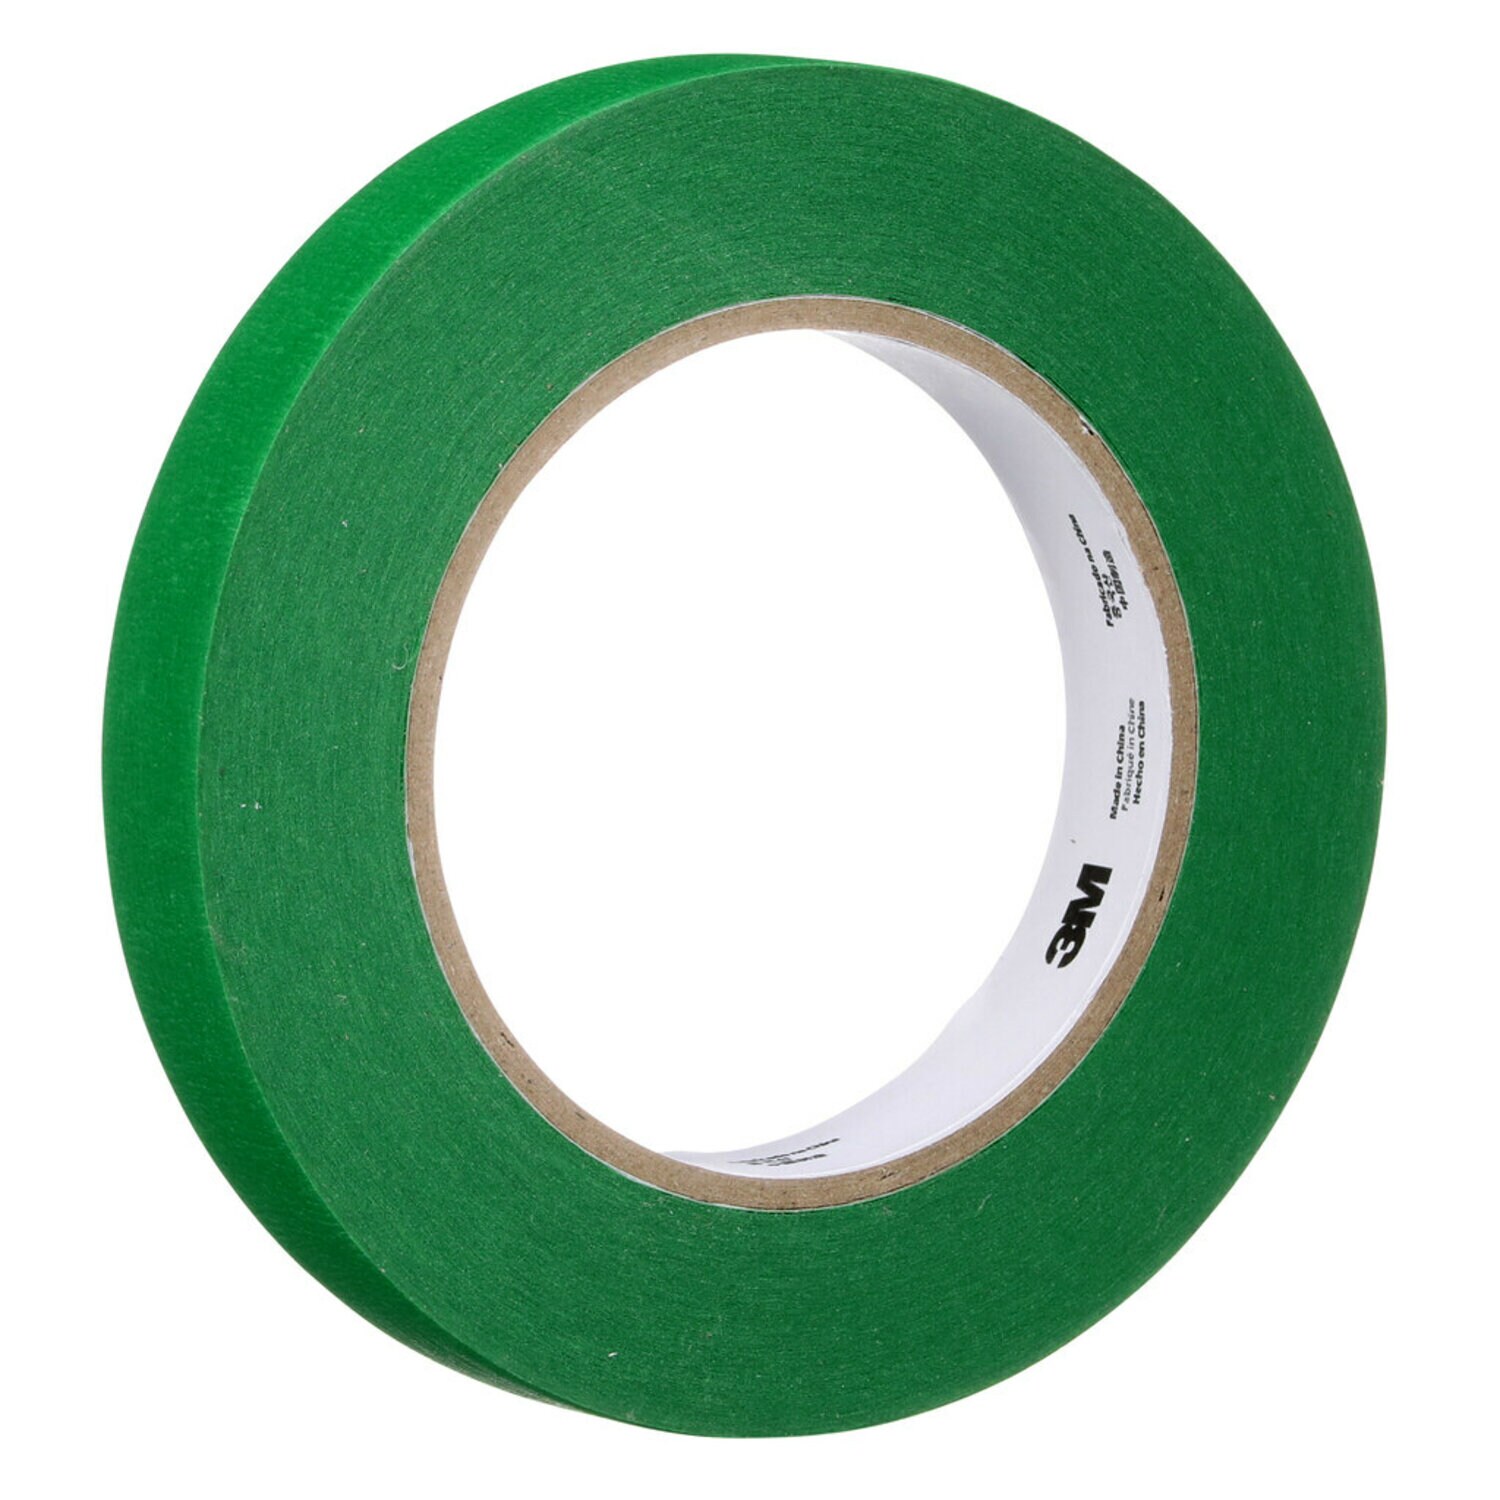 7100299468 - 3M UV Resistant Green Masking Tape, 18 mm x 55 m, 72 Rolls/Case